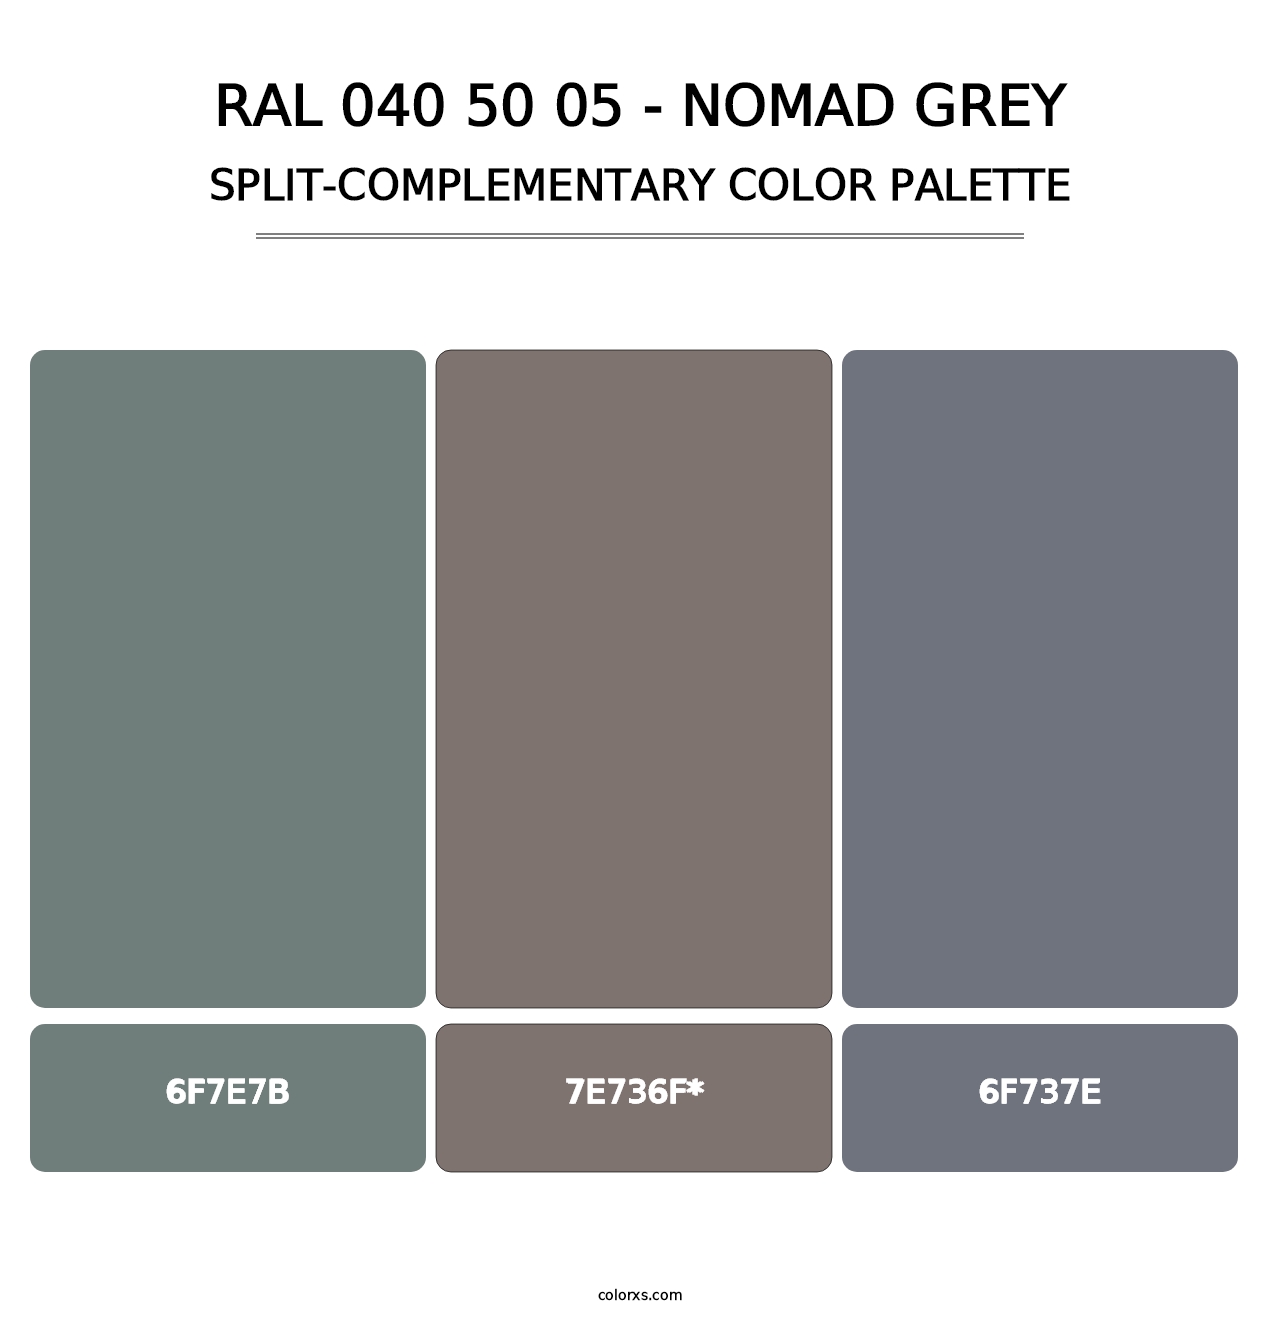 RAL 040 50 05 - Nomad Grey - Split-Complementary Color Palette